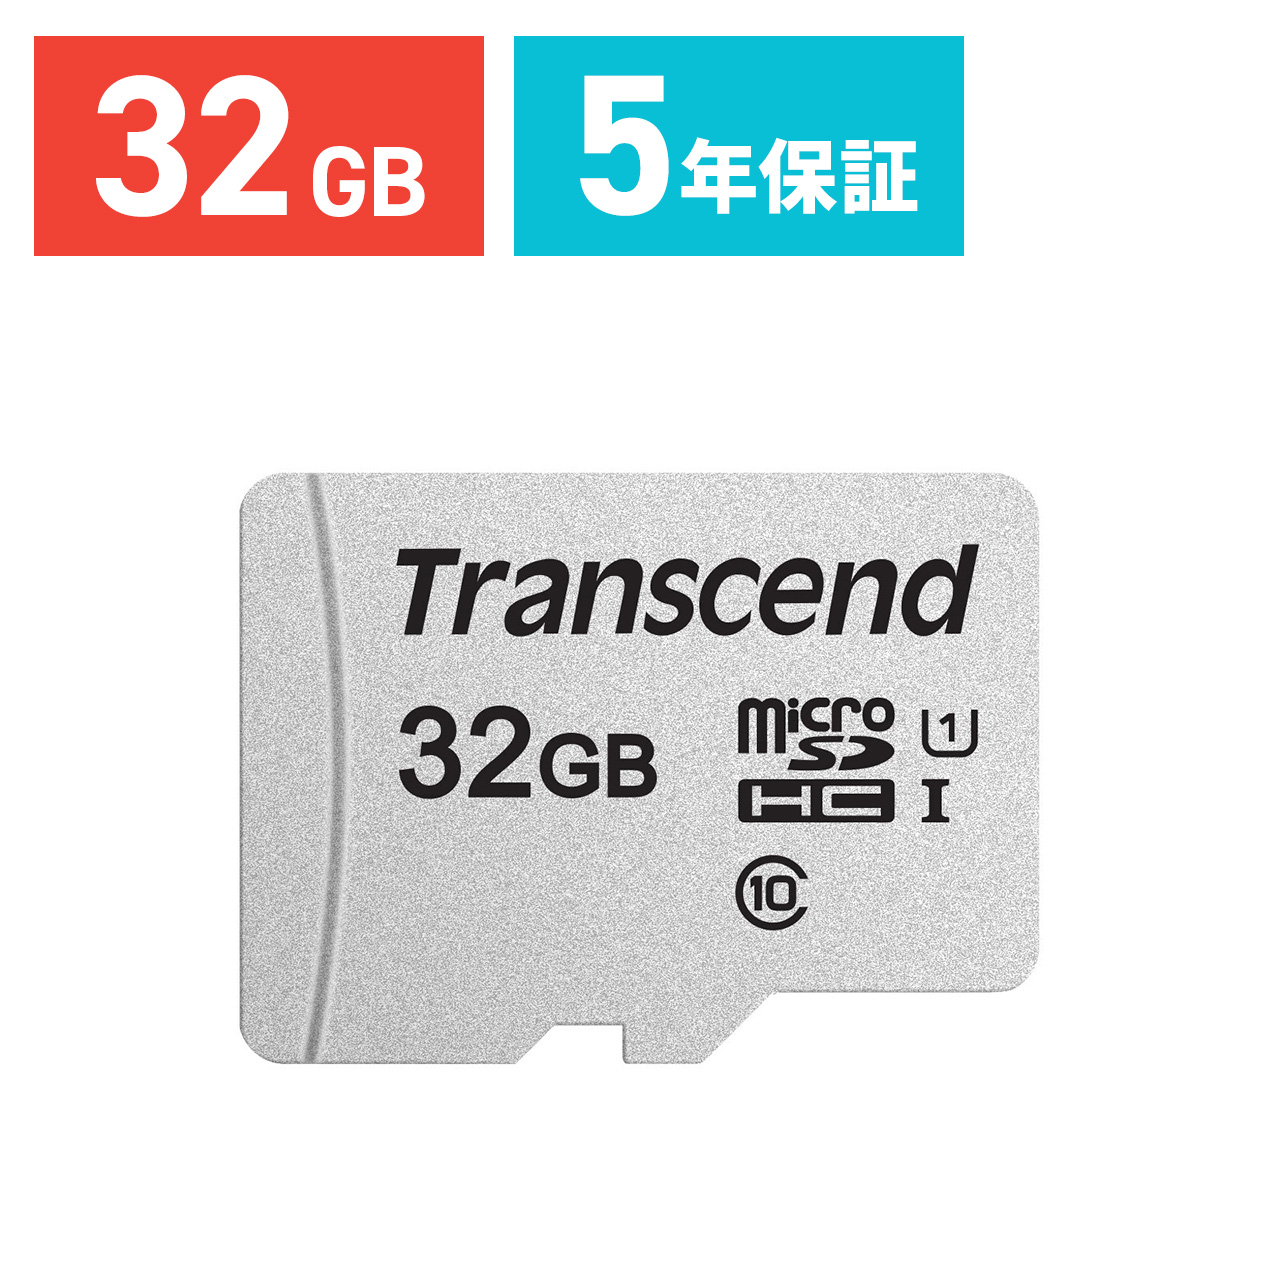 microSDカード 32GB microSDHC Class10 UHS-I U1 マイクロSD TS32GUSD300S